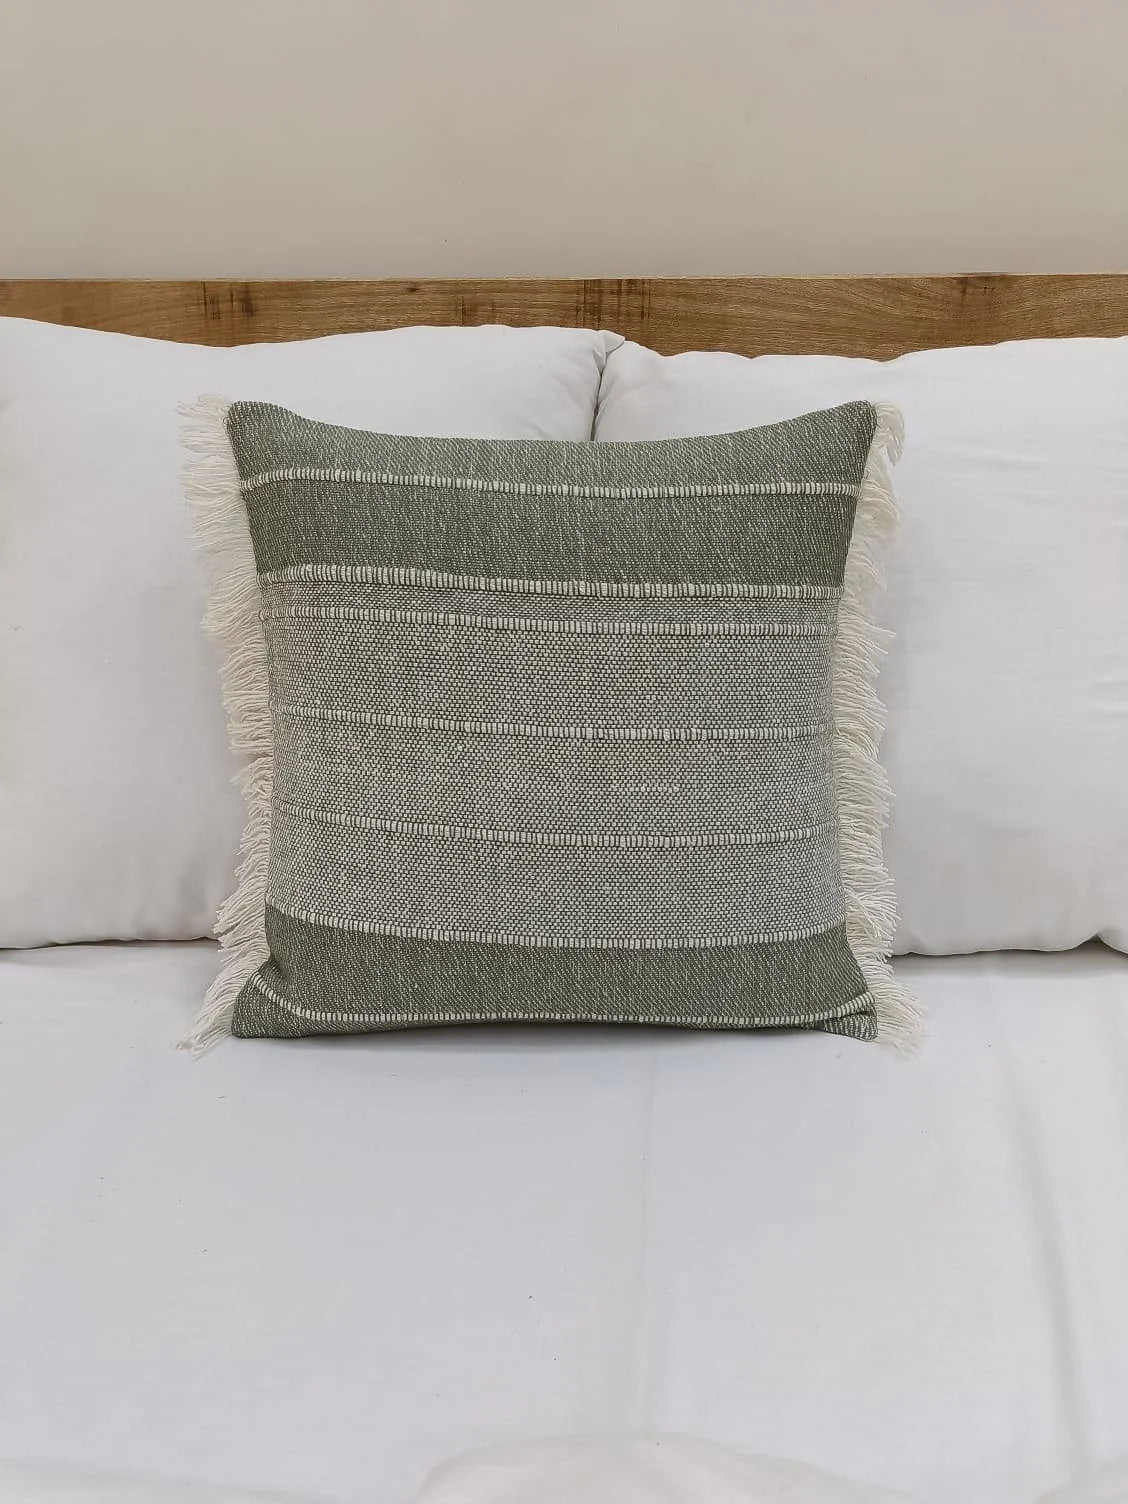 Textured Cotton Boho fringes Cushion Cover